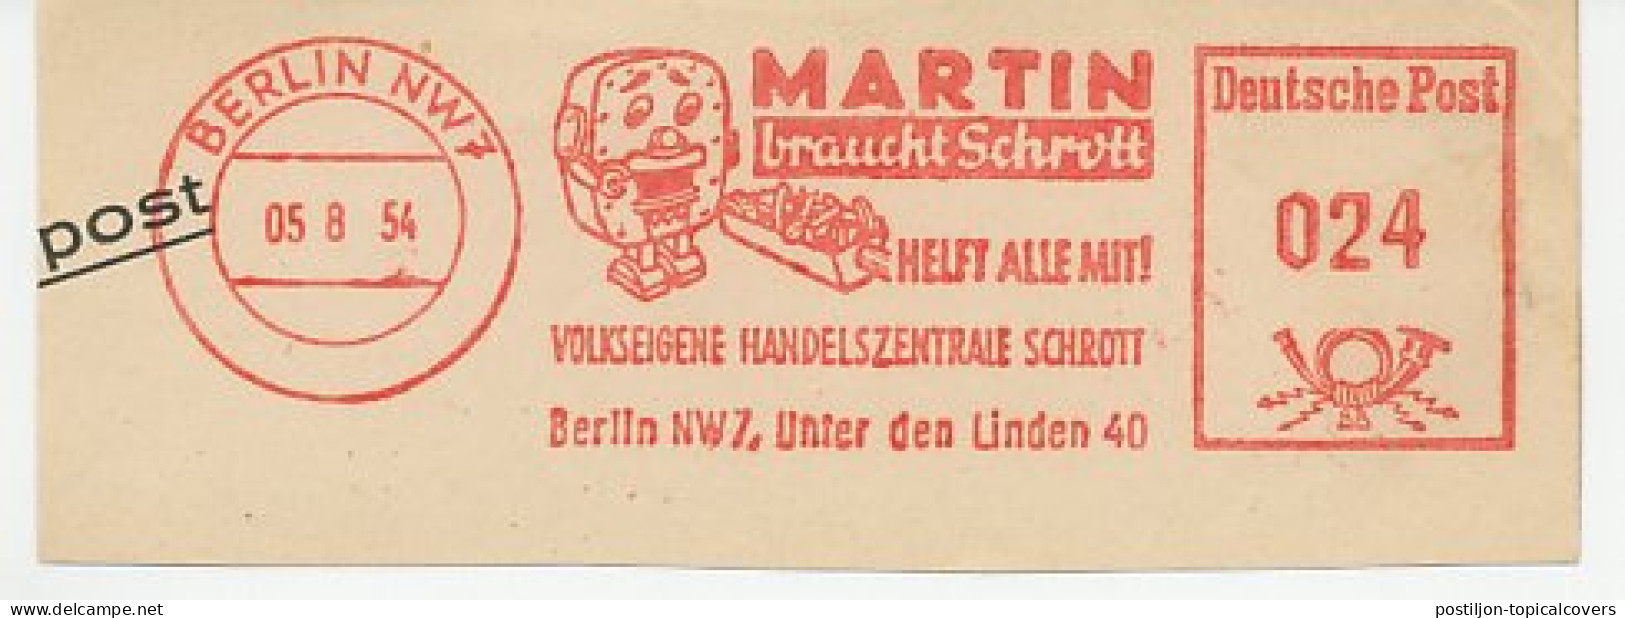 Meter Cut Germany 1954 Recycling - Scrap Metal - Martin Schrott - Fabriken Und Industrien